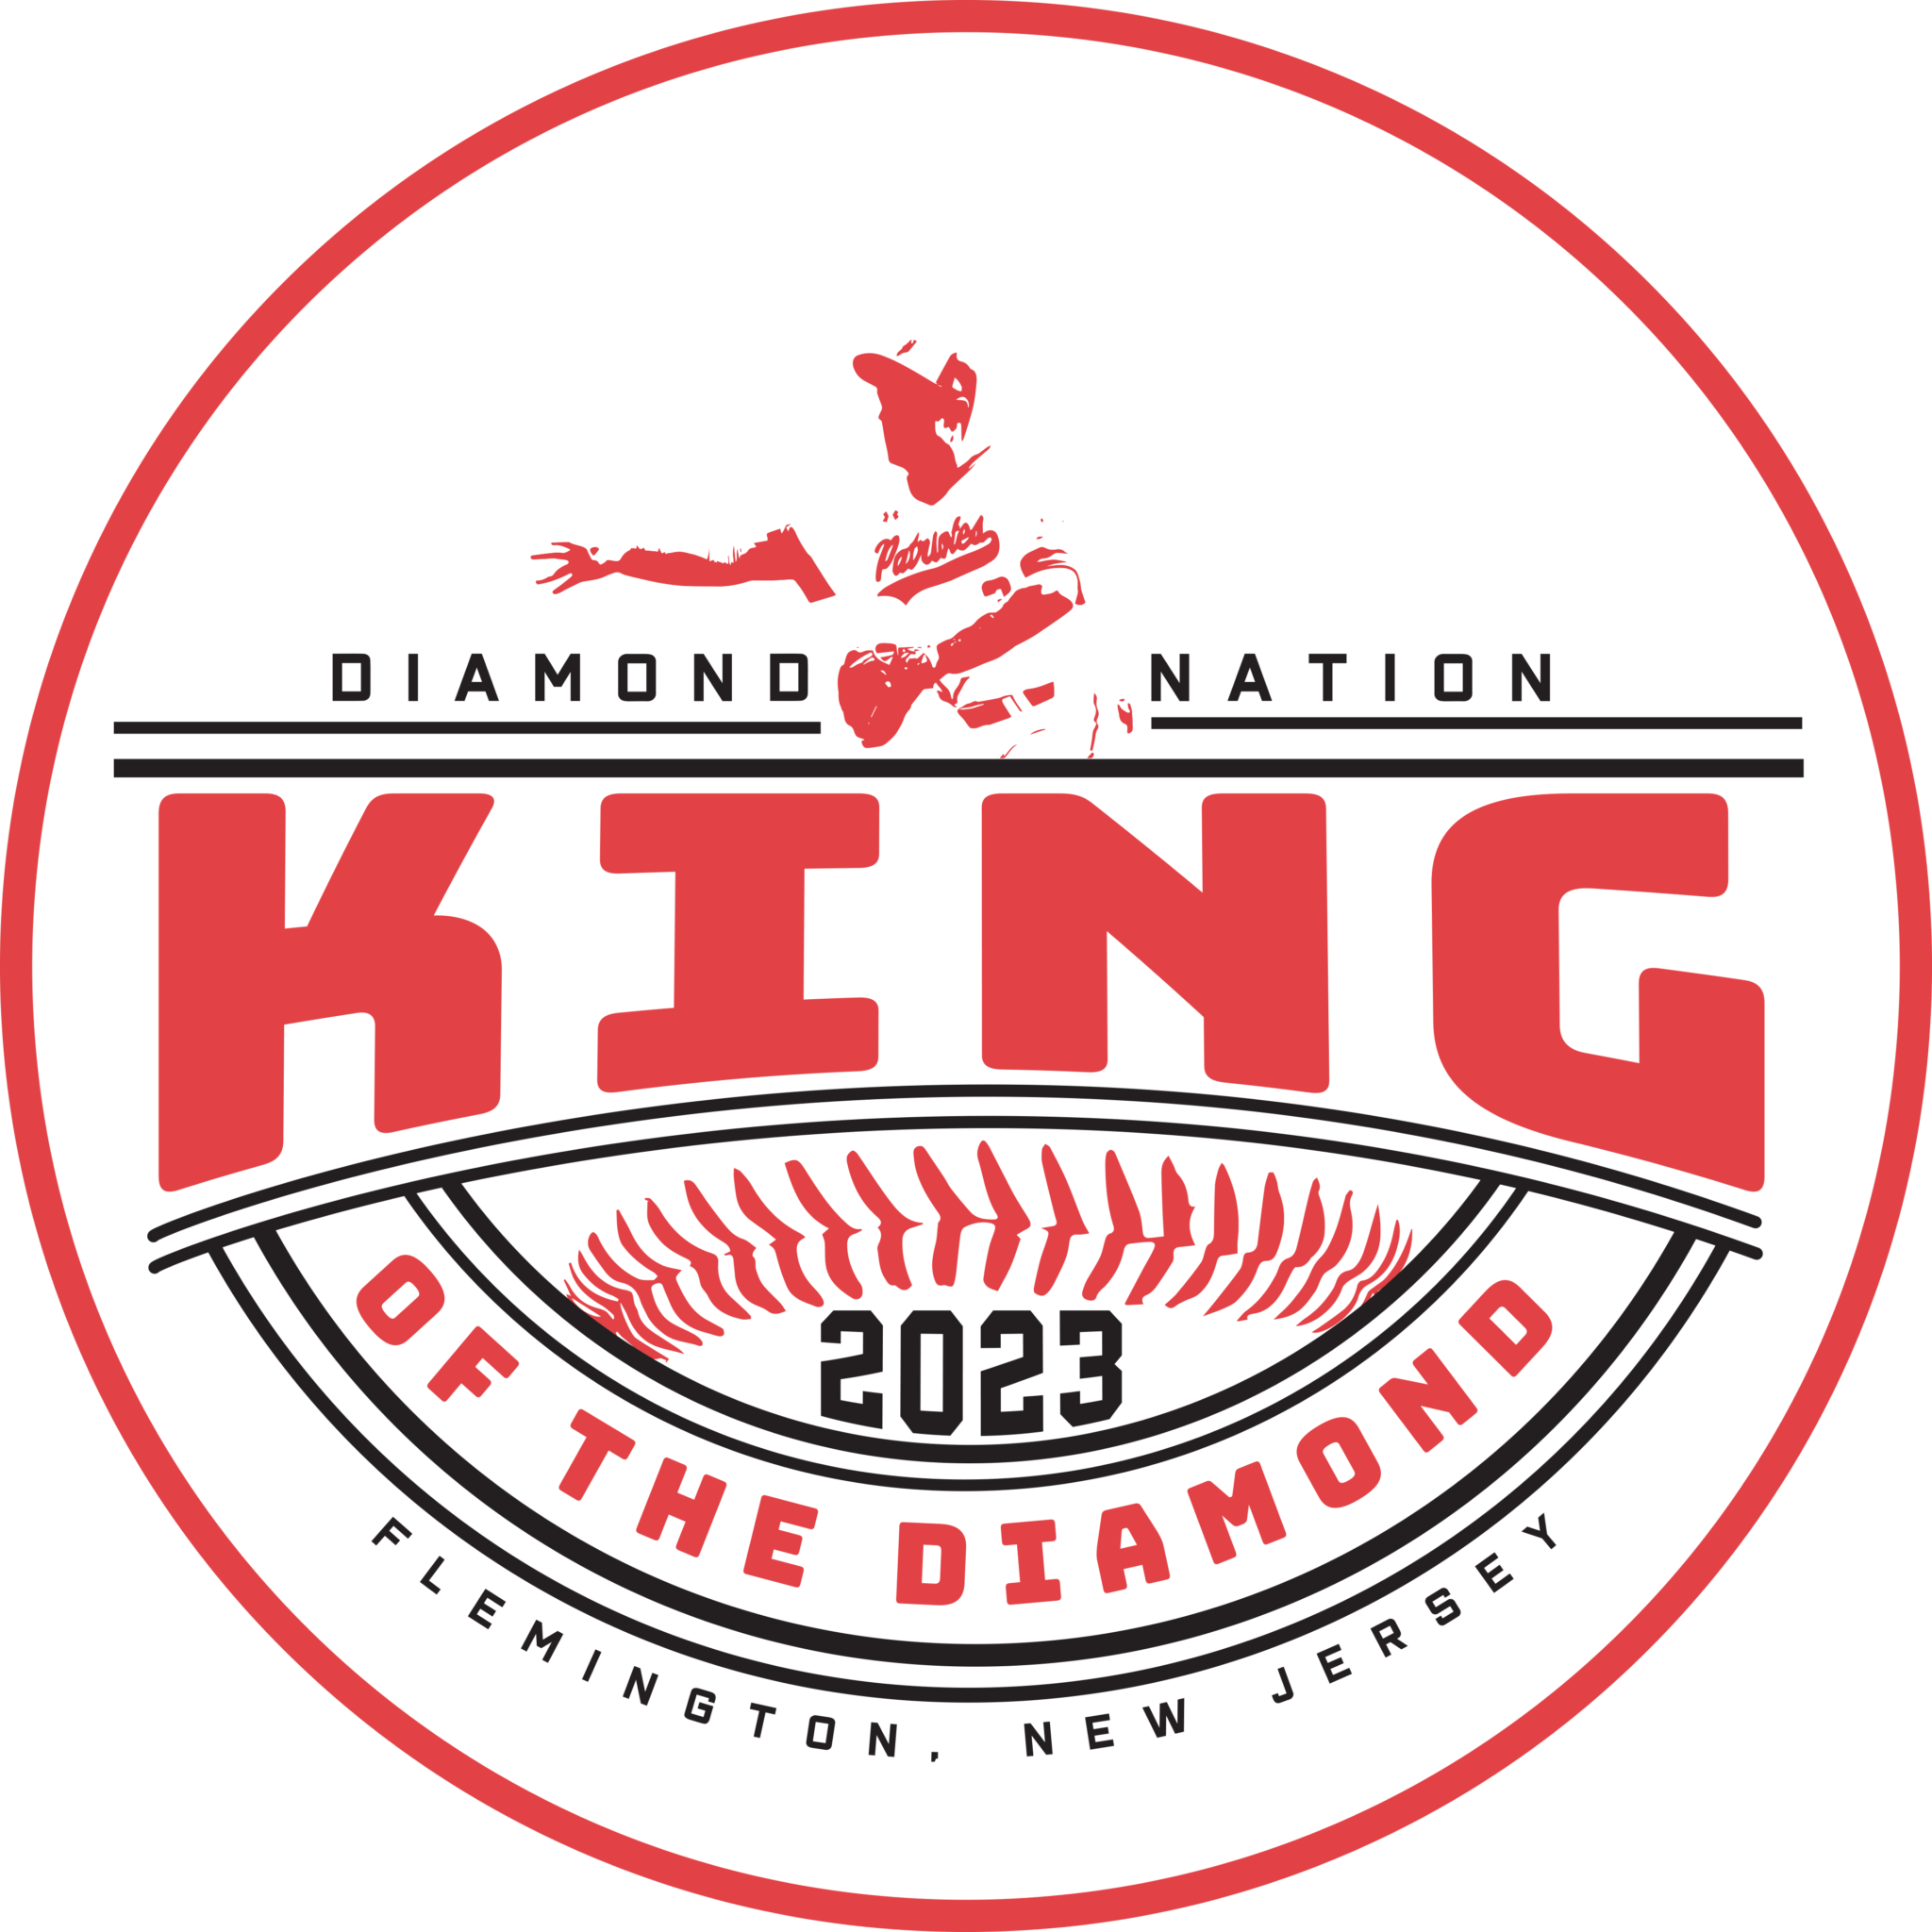 Diamond Nation The world’s premier baseball and Softball destination.